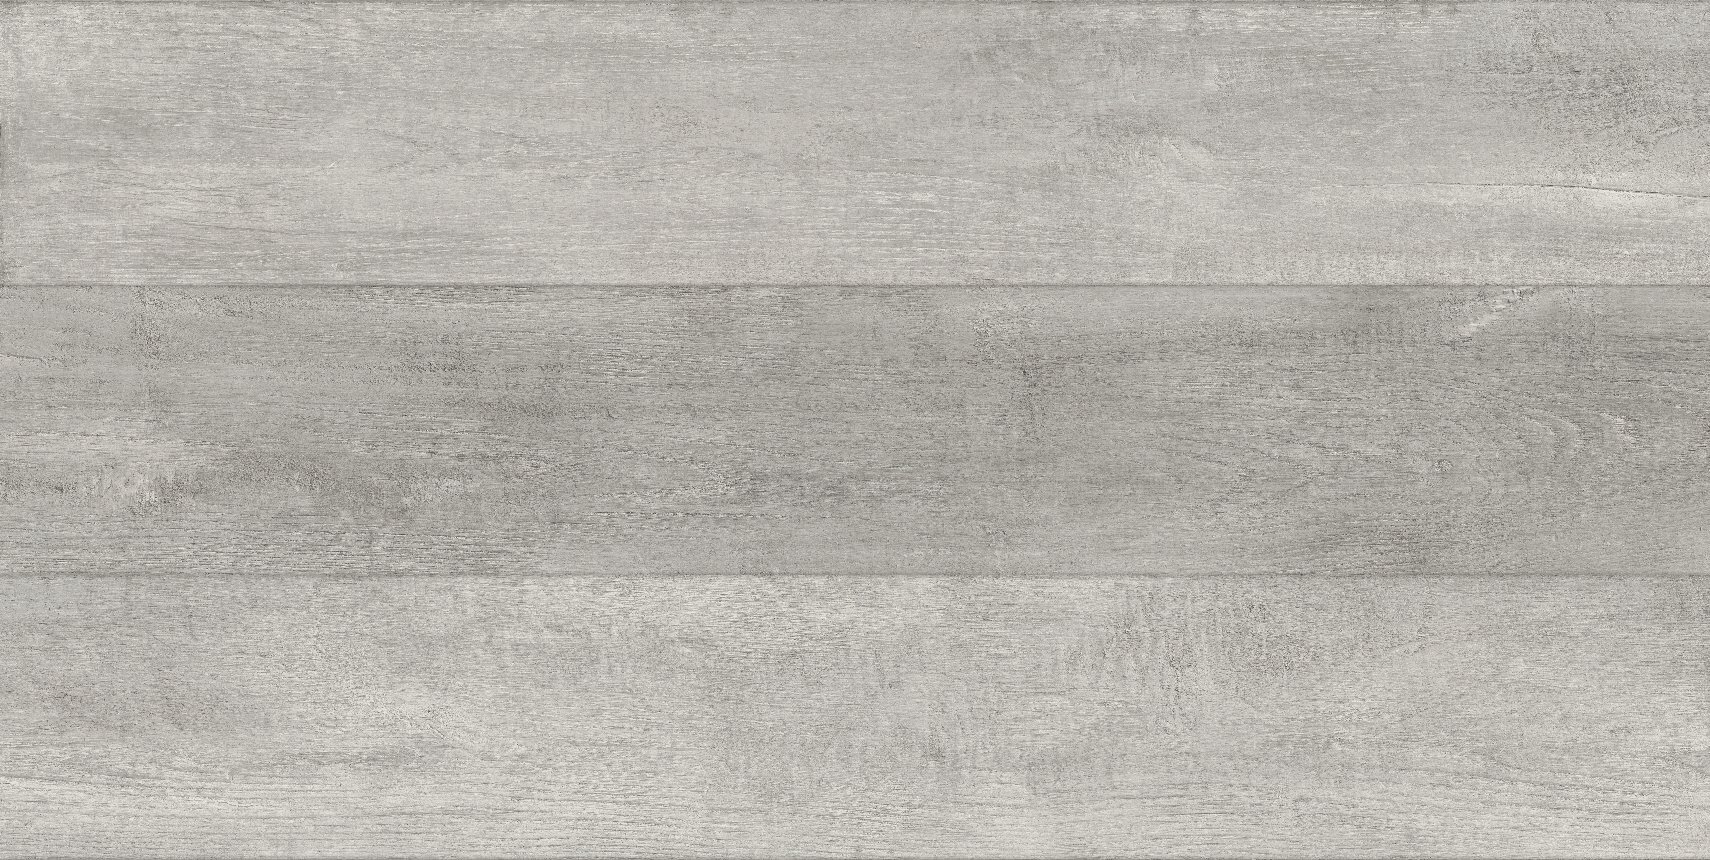 Abba Wood серый плитка д/стен 30*60 652161 (652169), Golden Tile